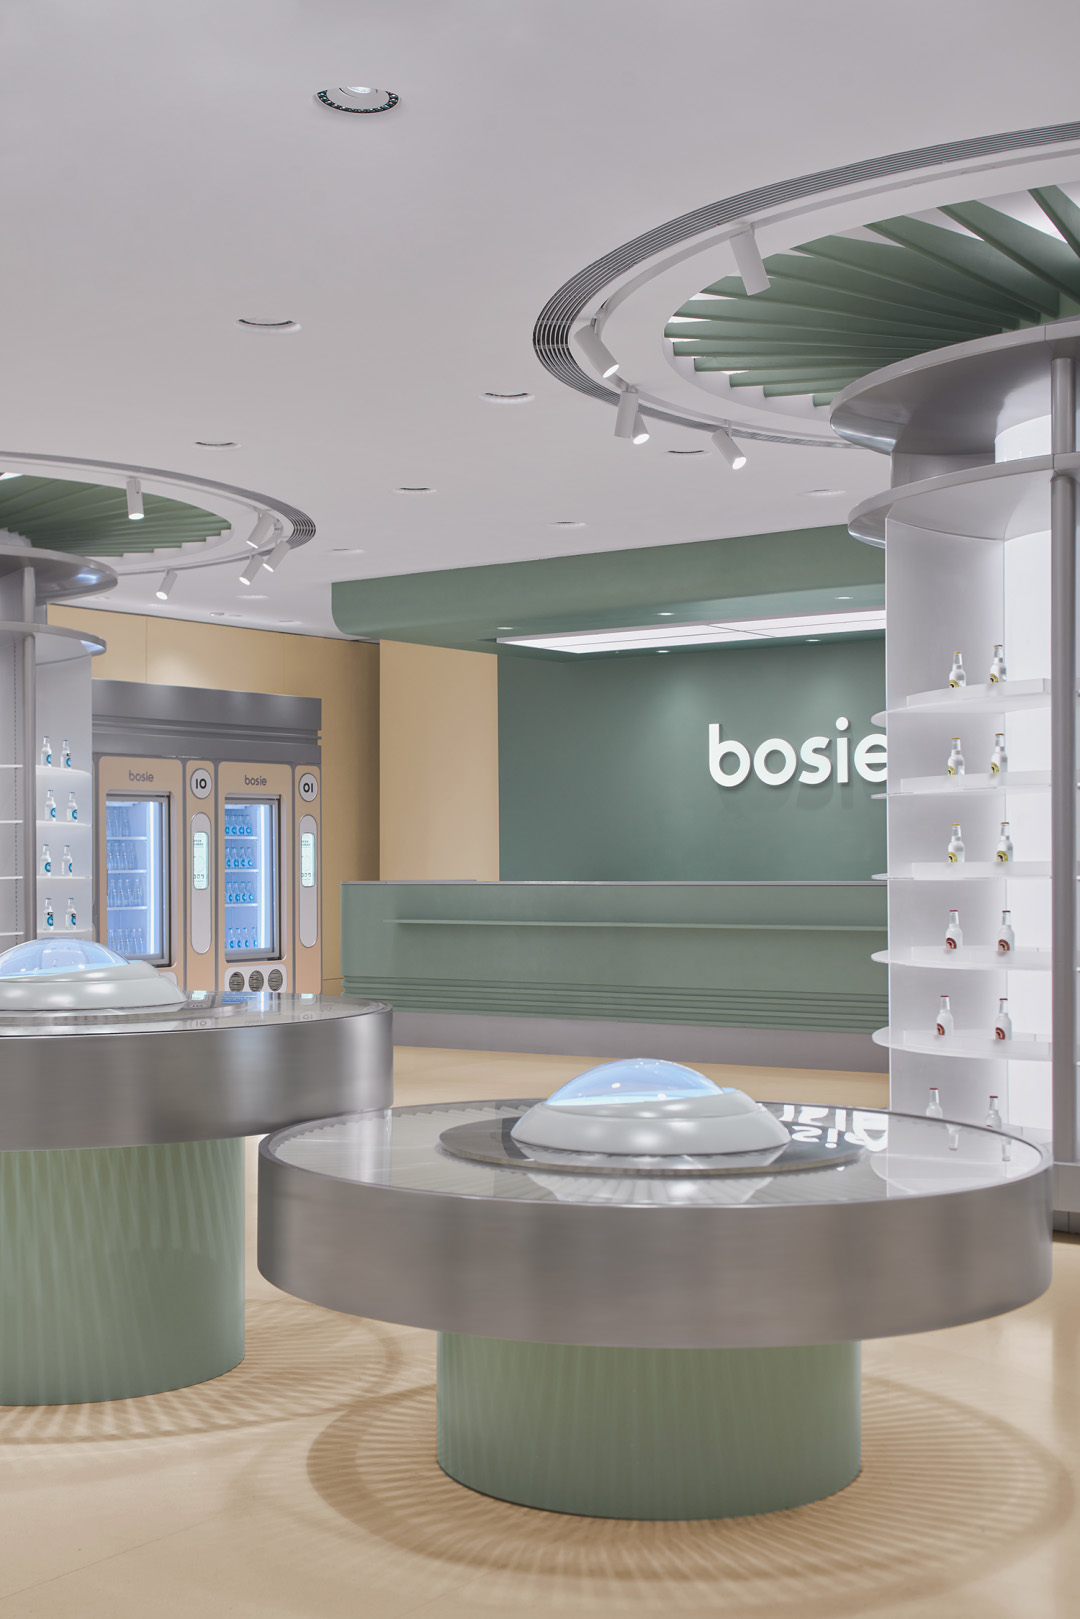 bosie「SPACE」,bosie,上海bosie,bosie旗舰店,快时尚店设计,体验店设计,零售店设计,网红店设计,上海网红店,立品设计Leaping Creative,立品设计